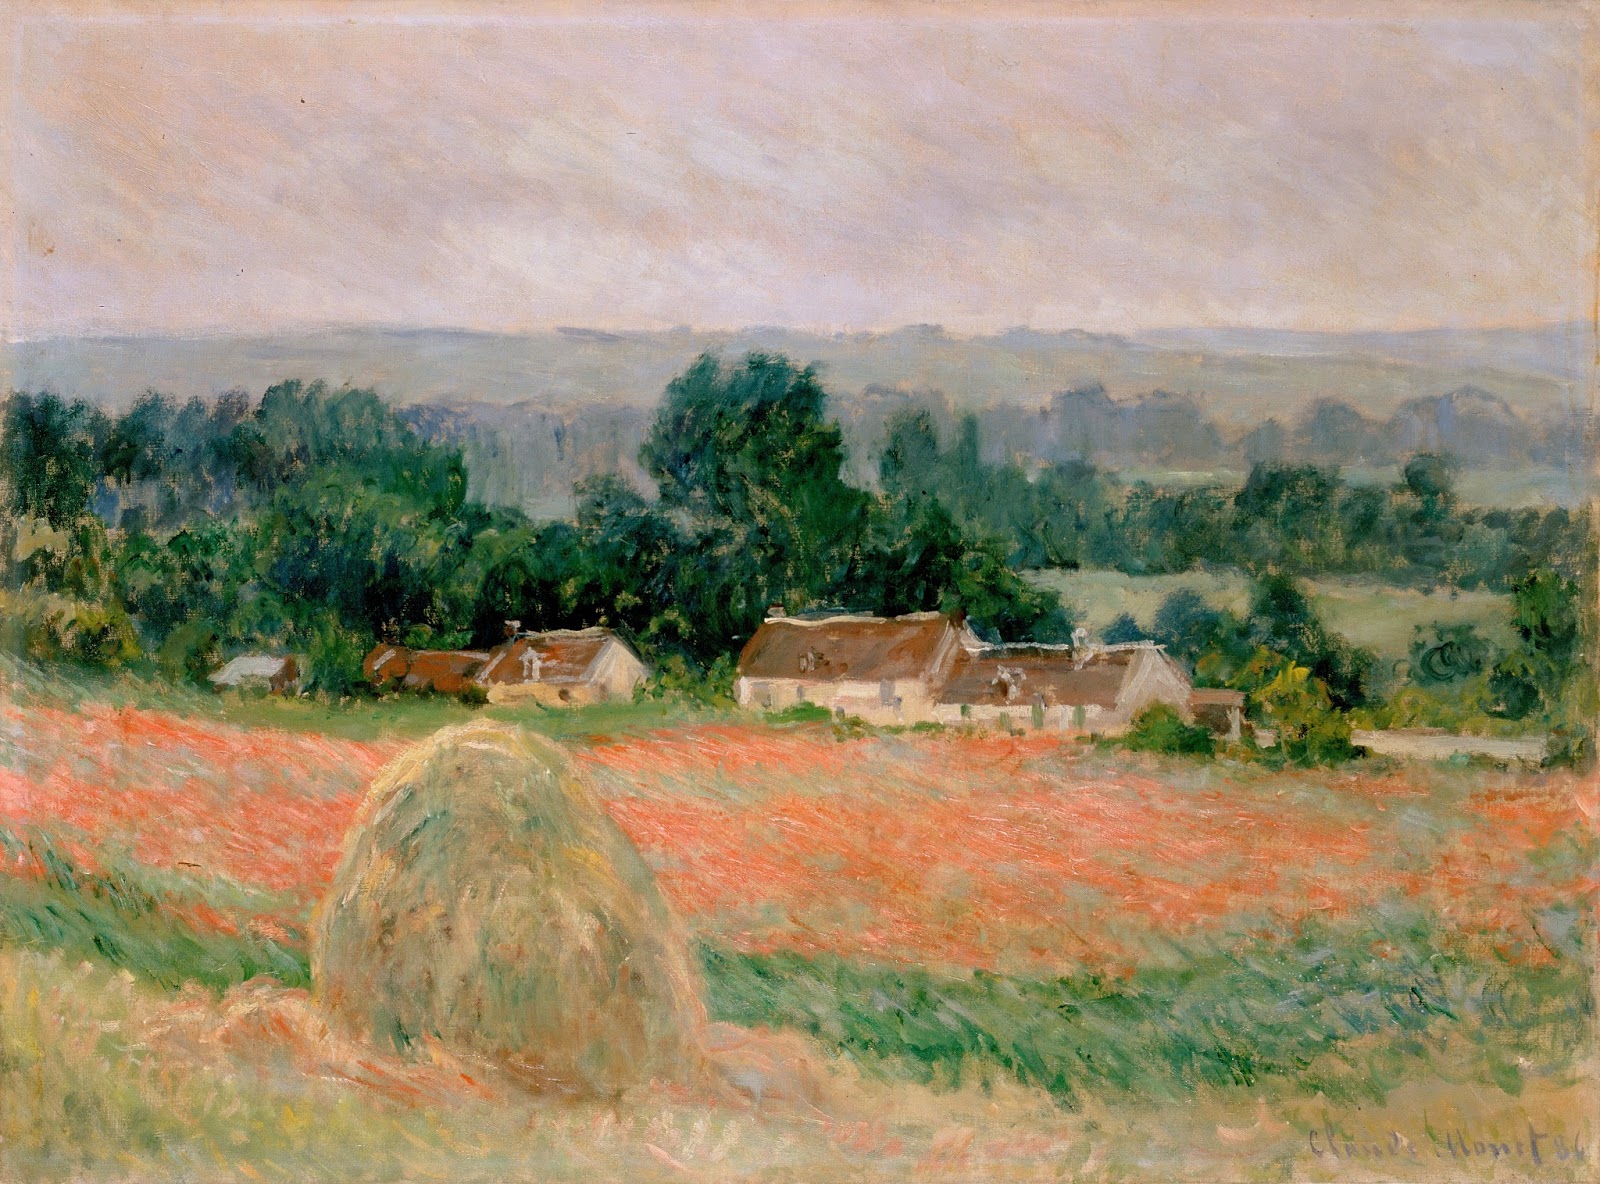 Claude+Monet-1840-1926 (200).jpg